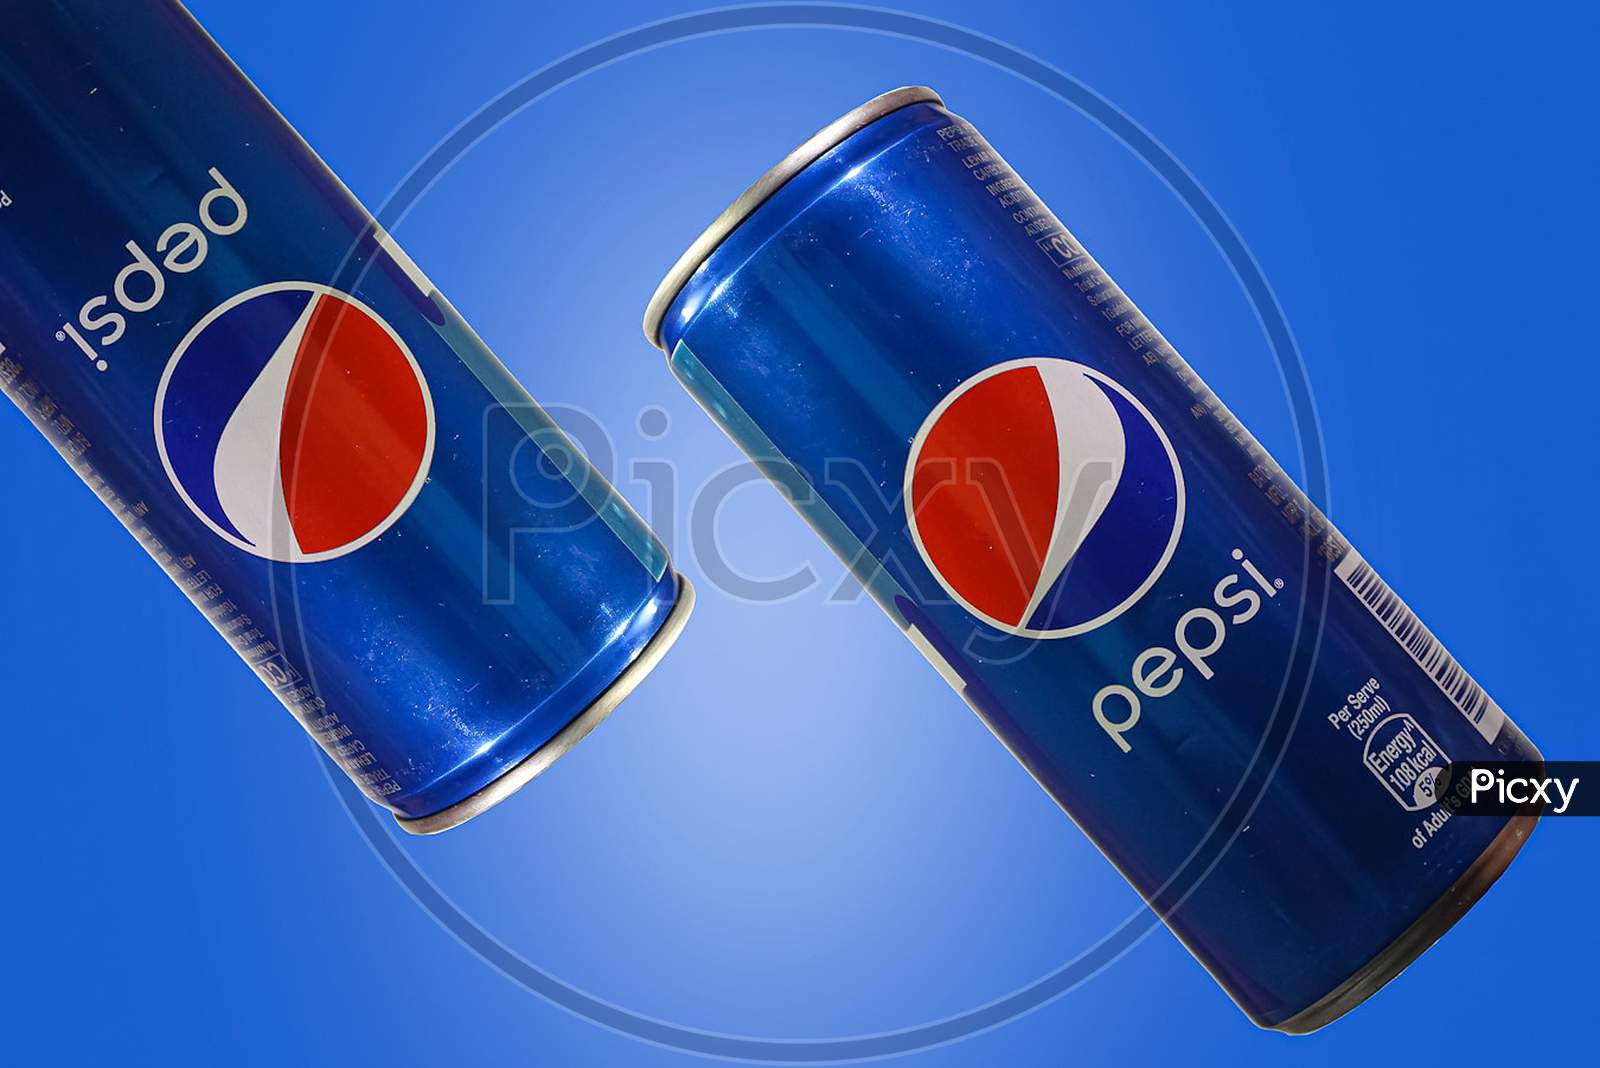 Product Photography - Pepsi